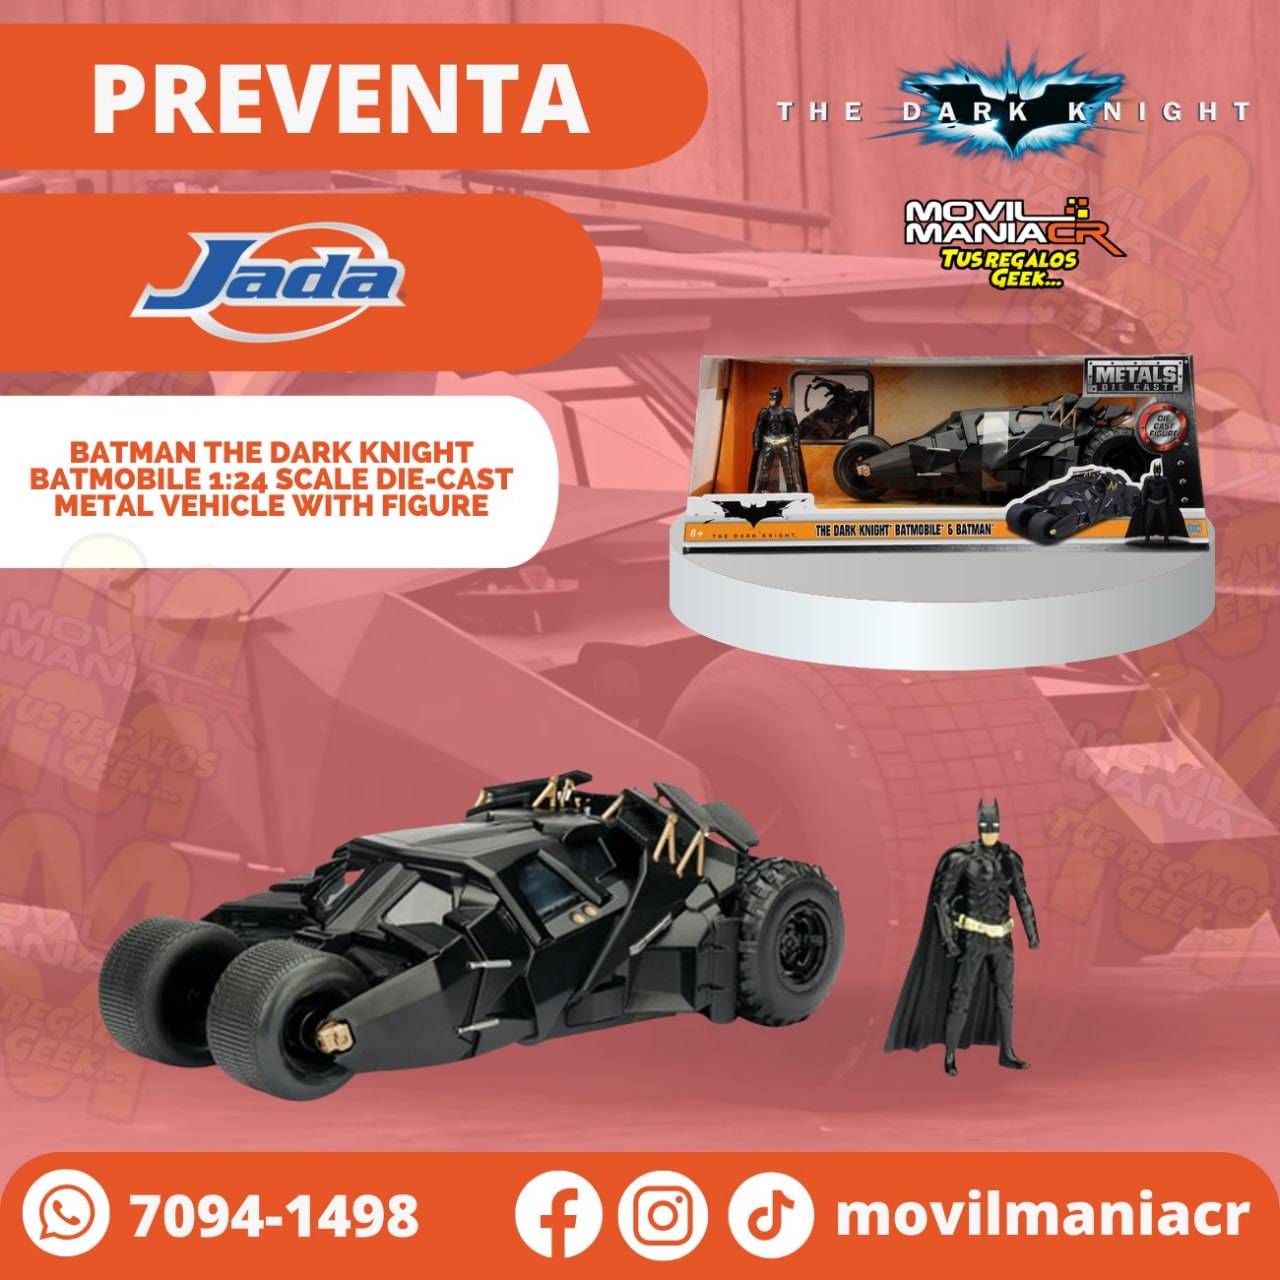 Preventa Carro Jada Toys Batman The Dark Knight Escala 124